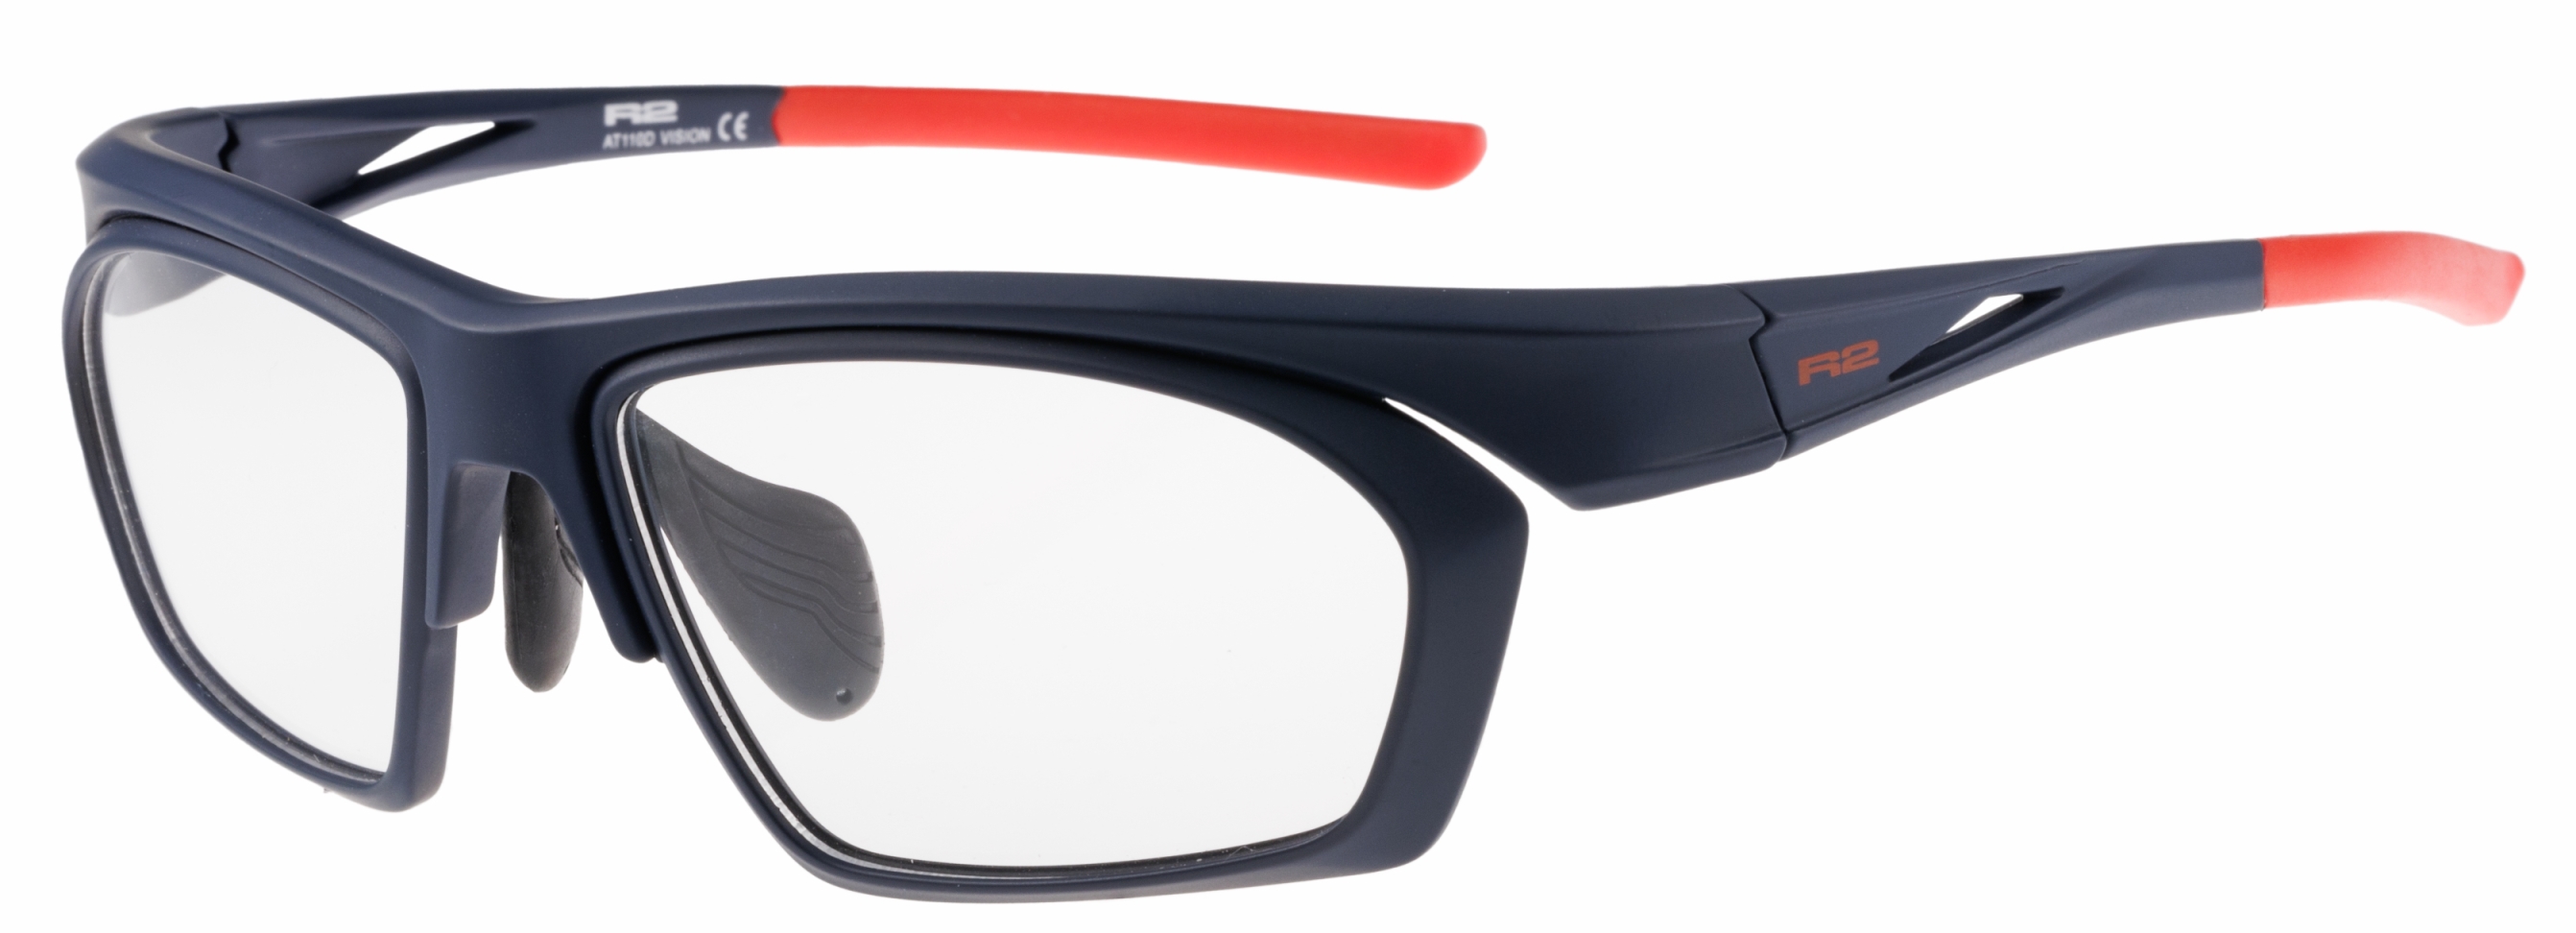 Sportovní dioptrické brýle R2 VISION AT110D - standard